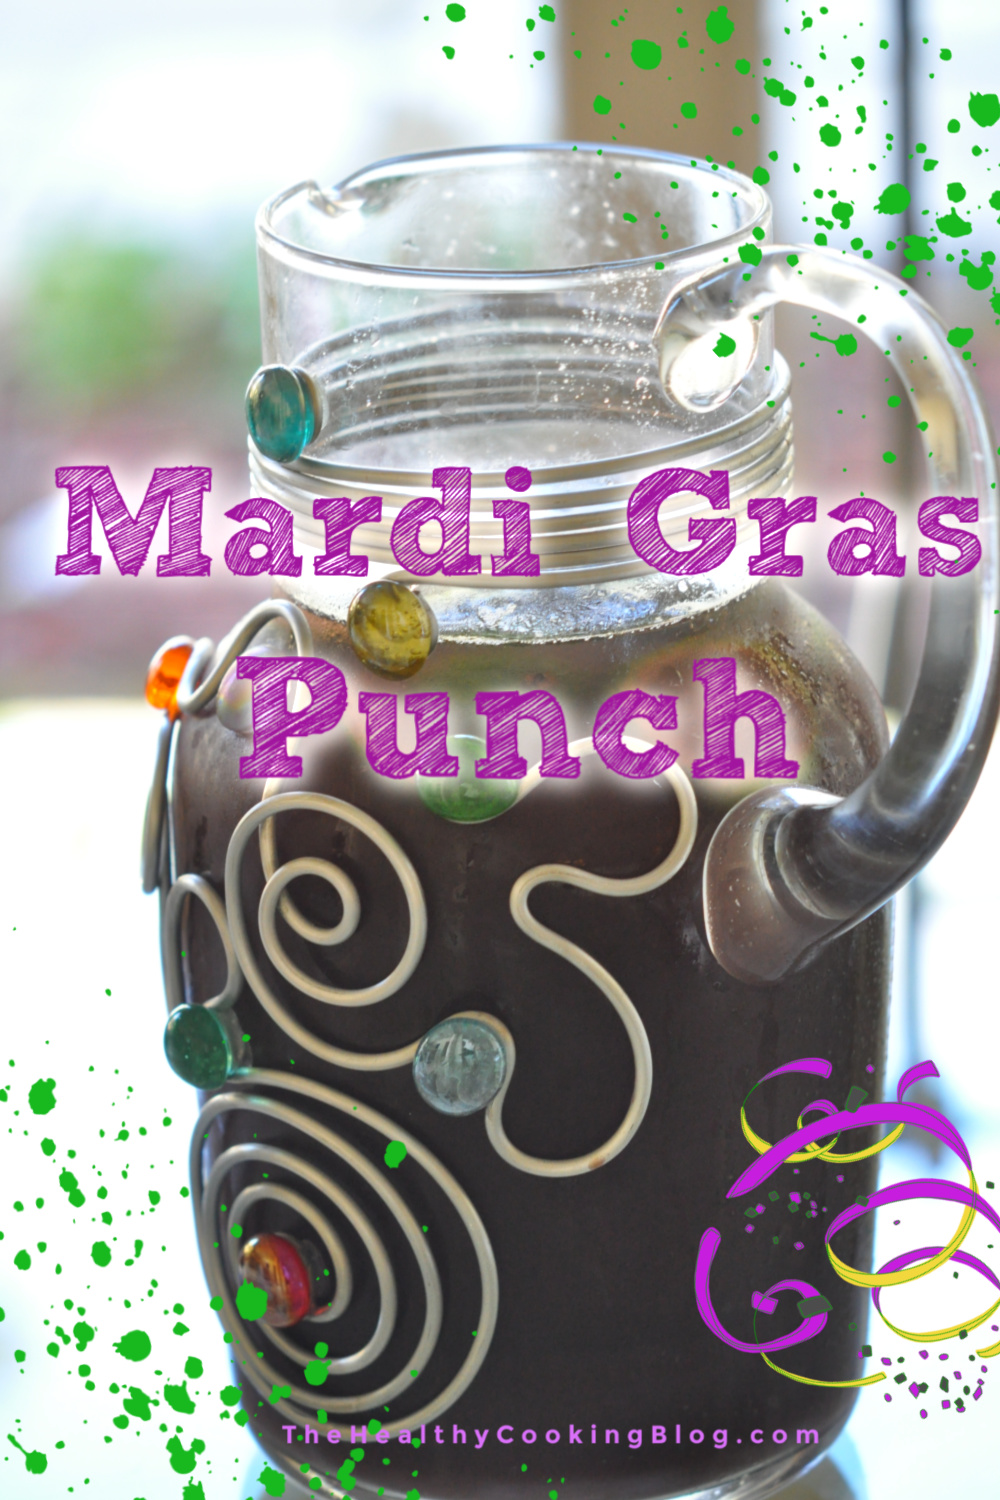 Mardi Gras Salad Recipe for Your Festive Mardi Gras Menu - The Healthy ...